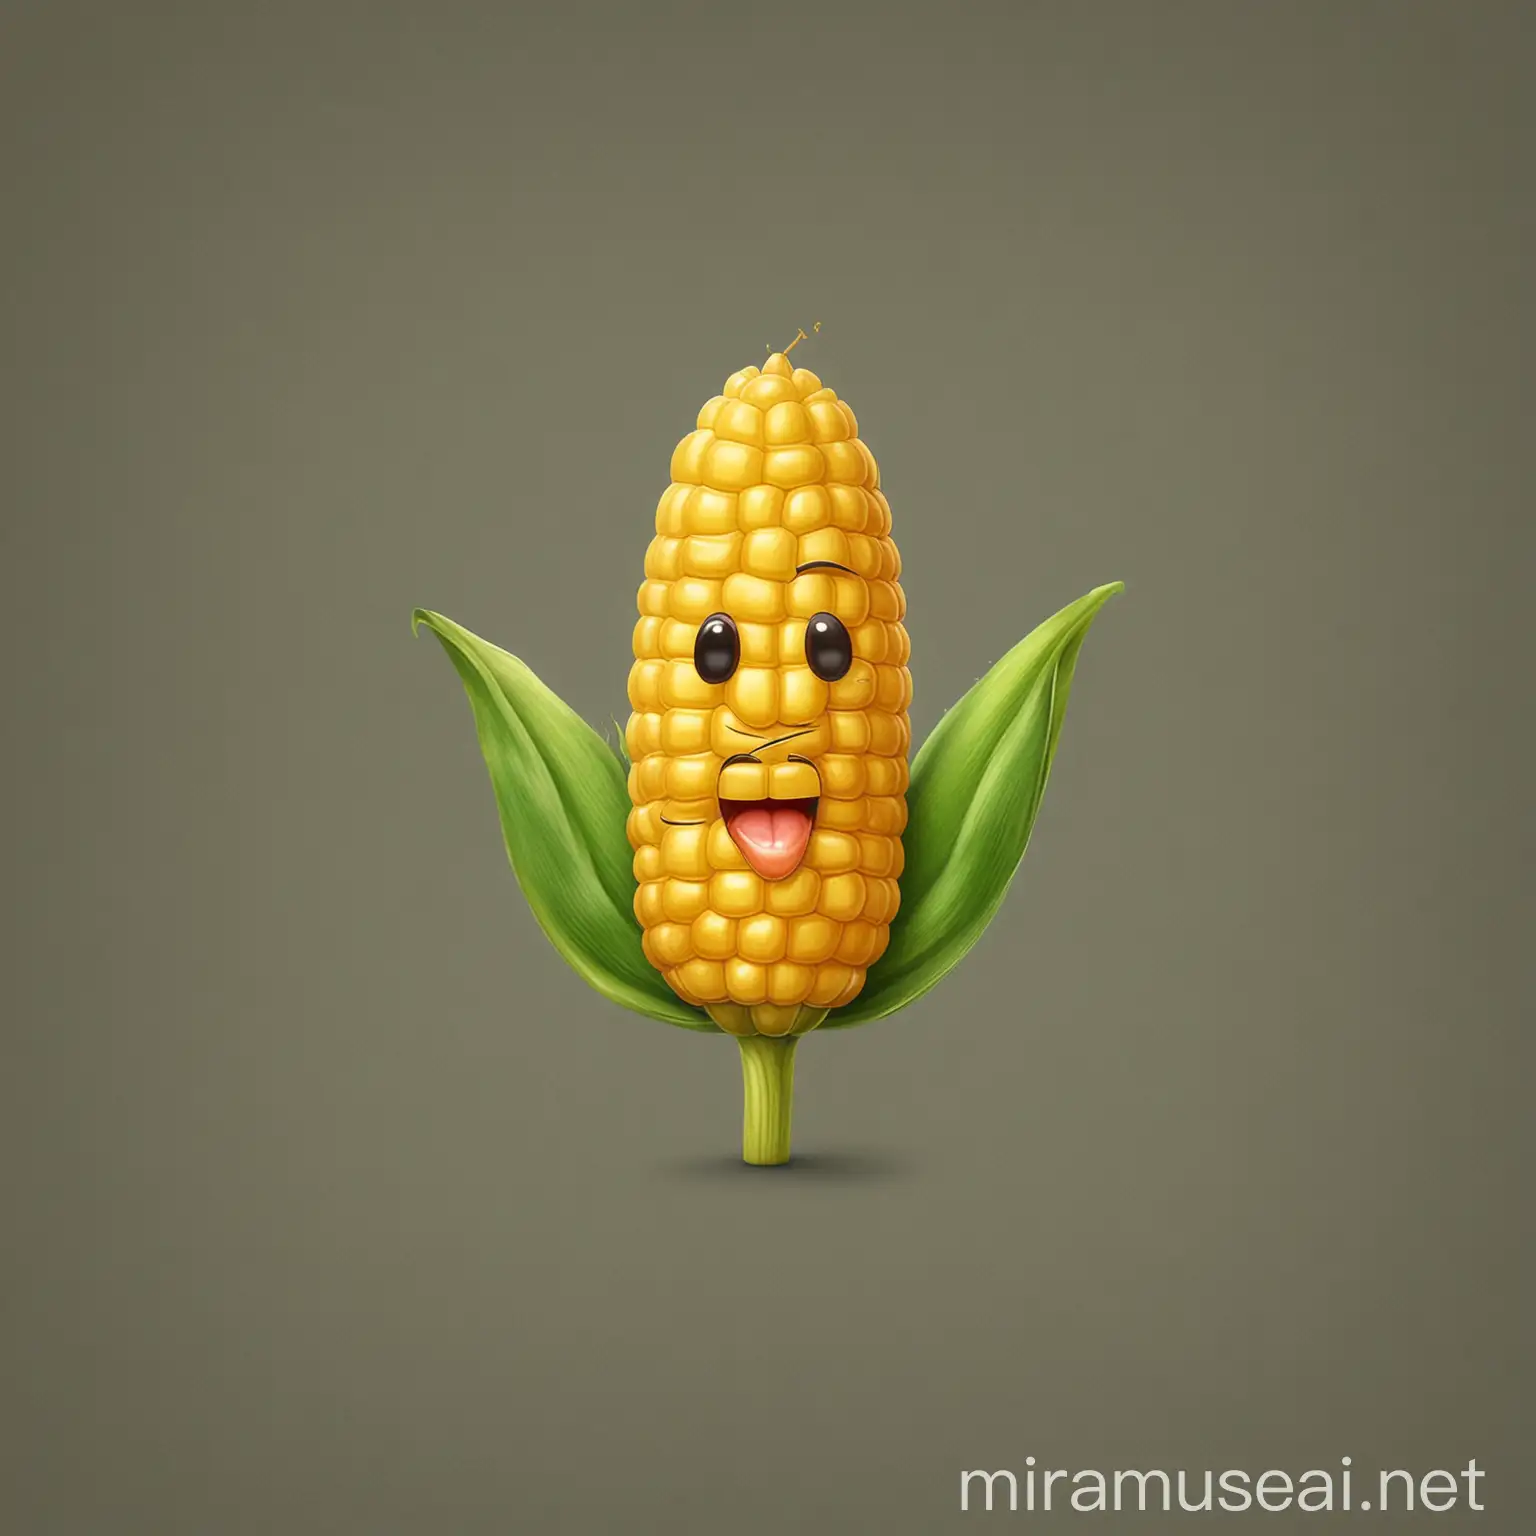 Vibrant Corn Emoji Illustration with Cheerful Expression